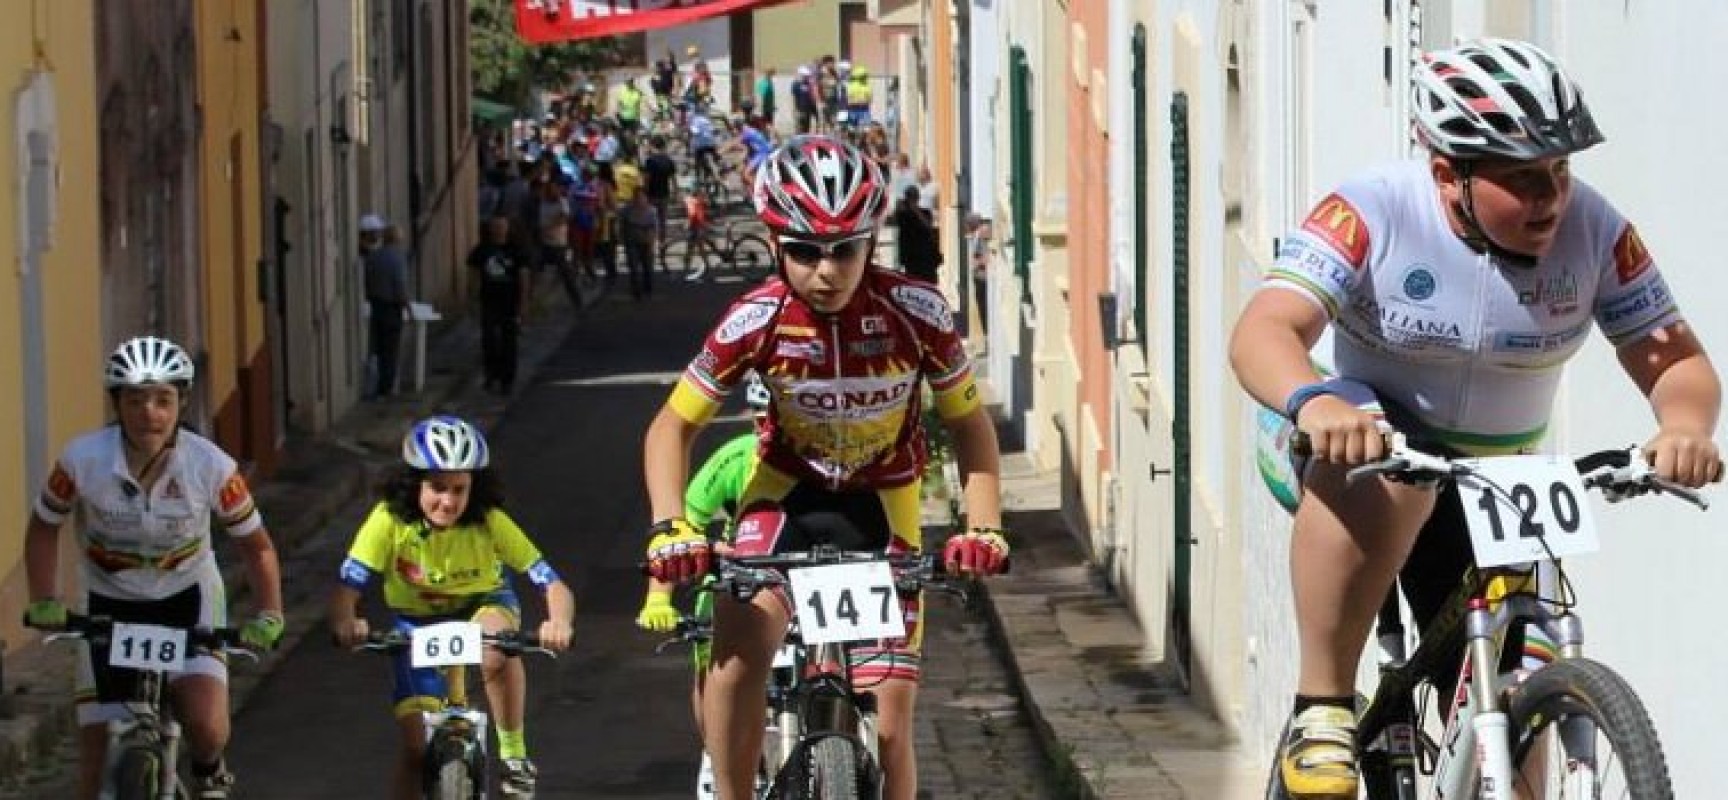 Ciclismo, Cavallaro protagonista ai campionati regionali